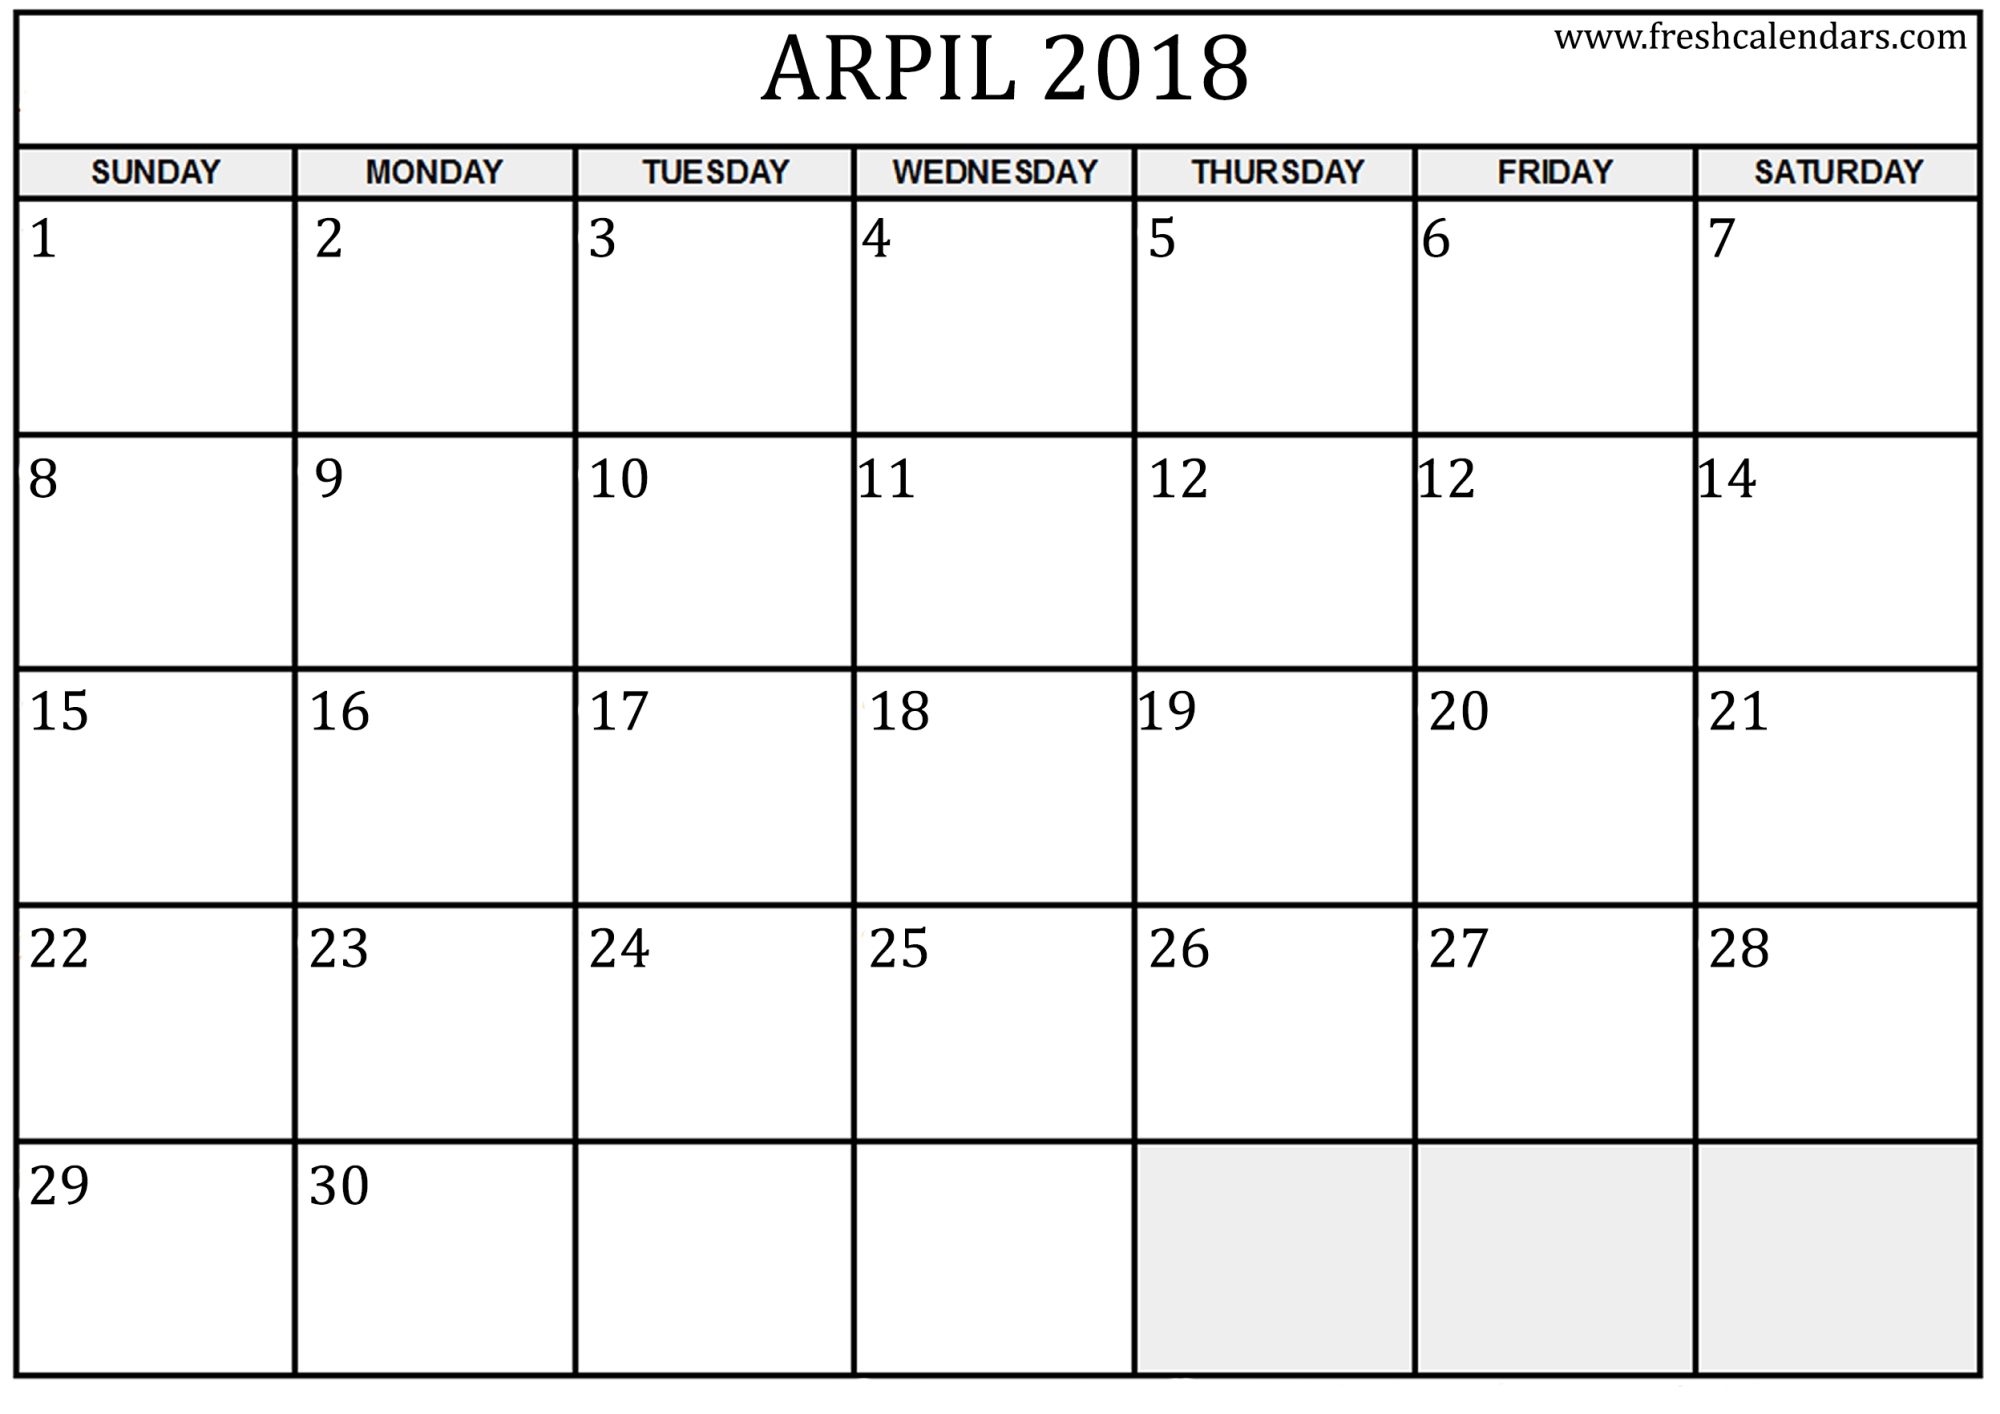 april-2018-calendar-free-calendar